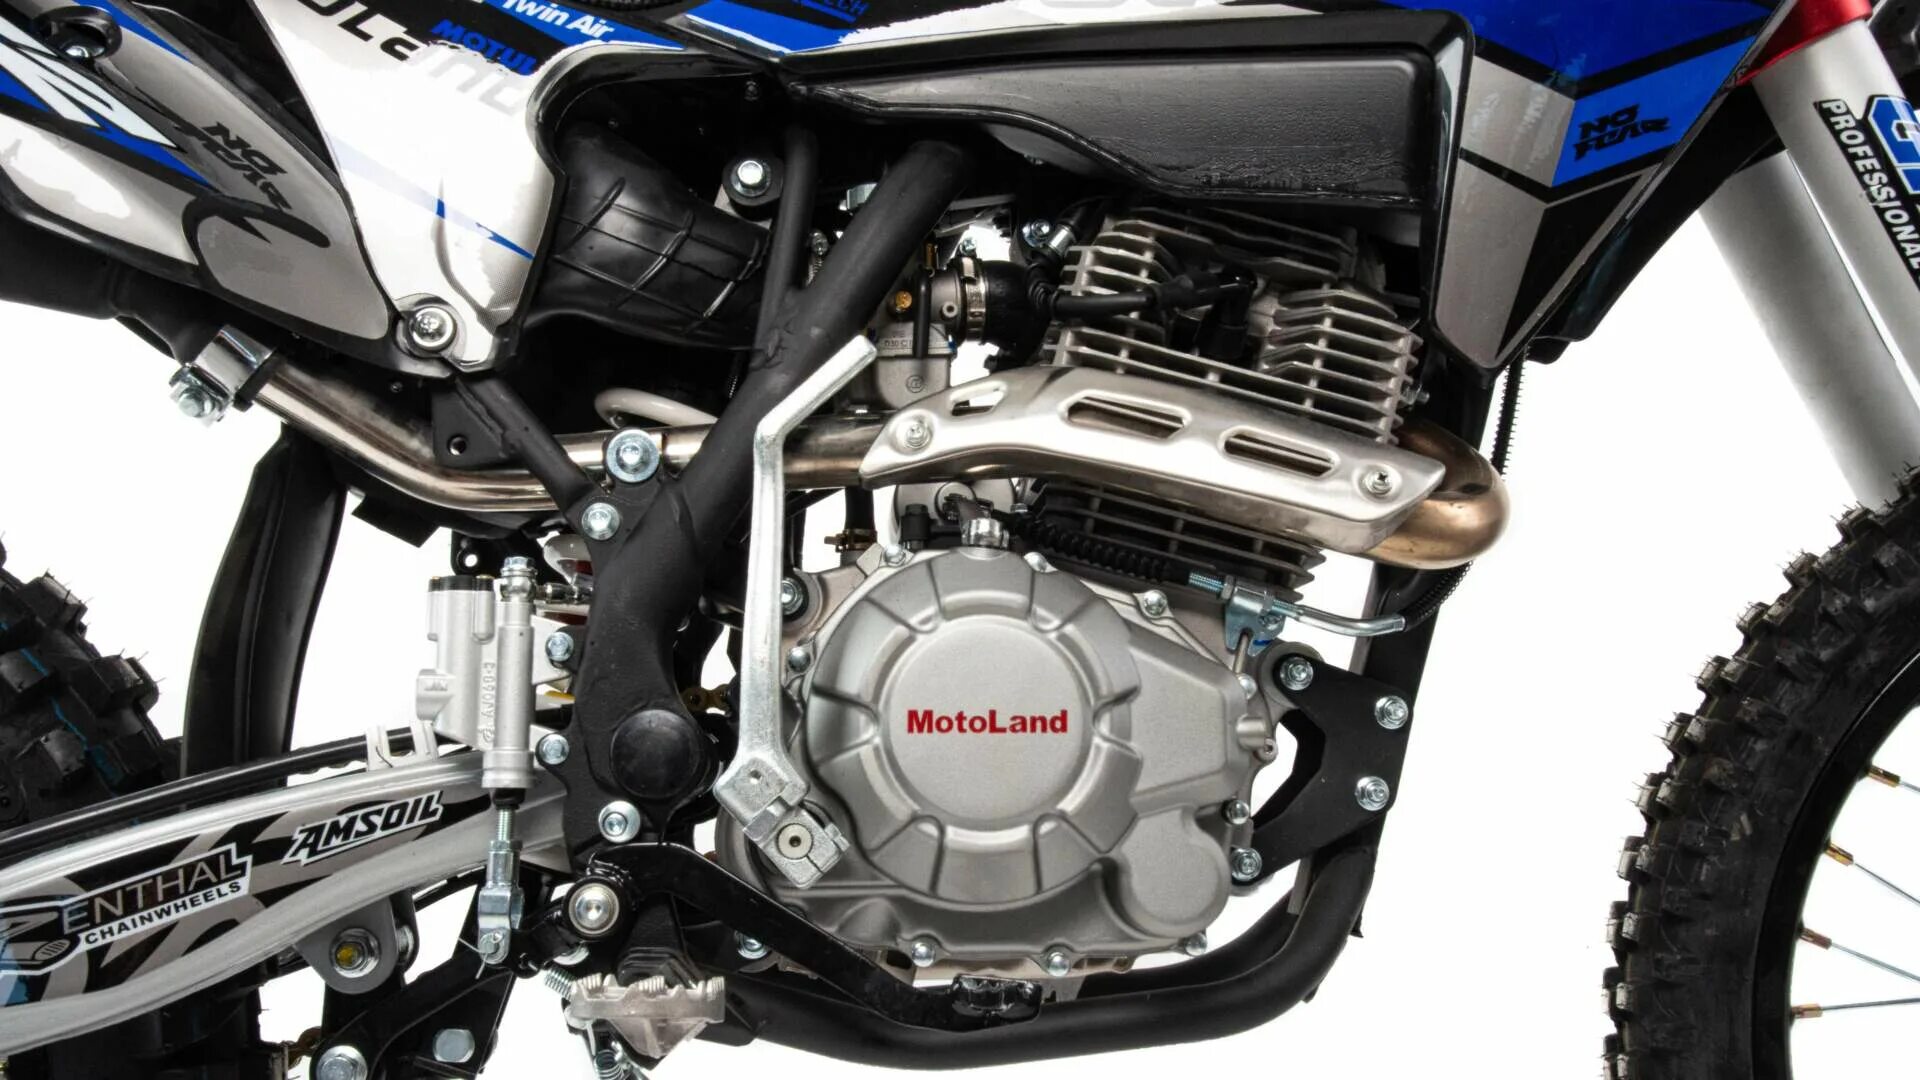 Мотолэнд xt250 HS. Motoland XT 300 HS. Мотоцикл кросс Motoland xt300 HS (172fmm). Мотолэнд ХТ 250.